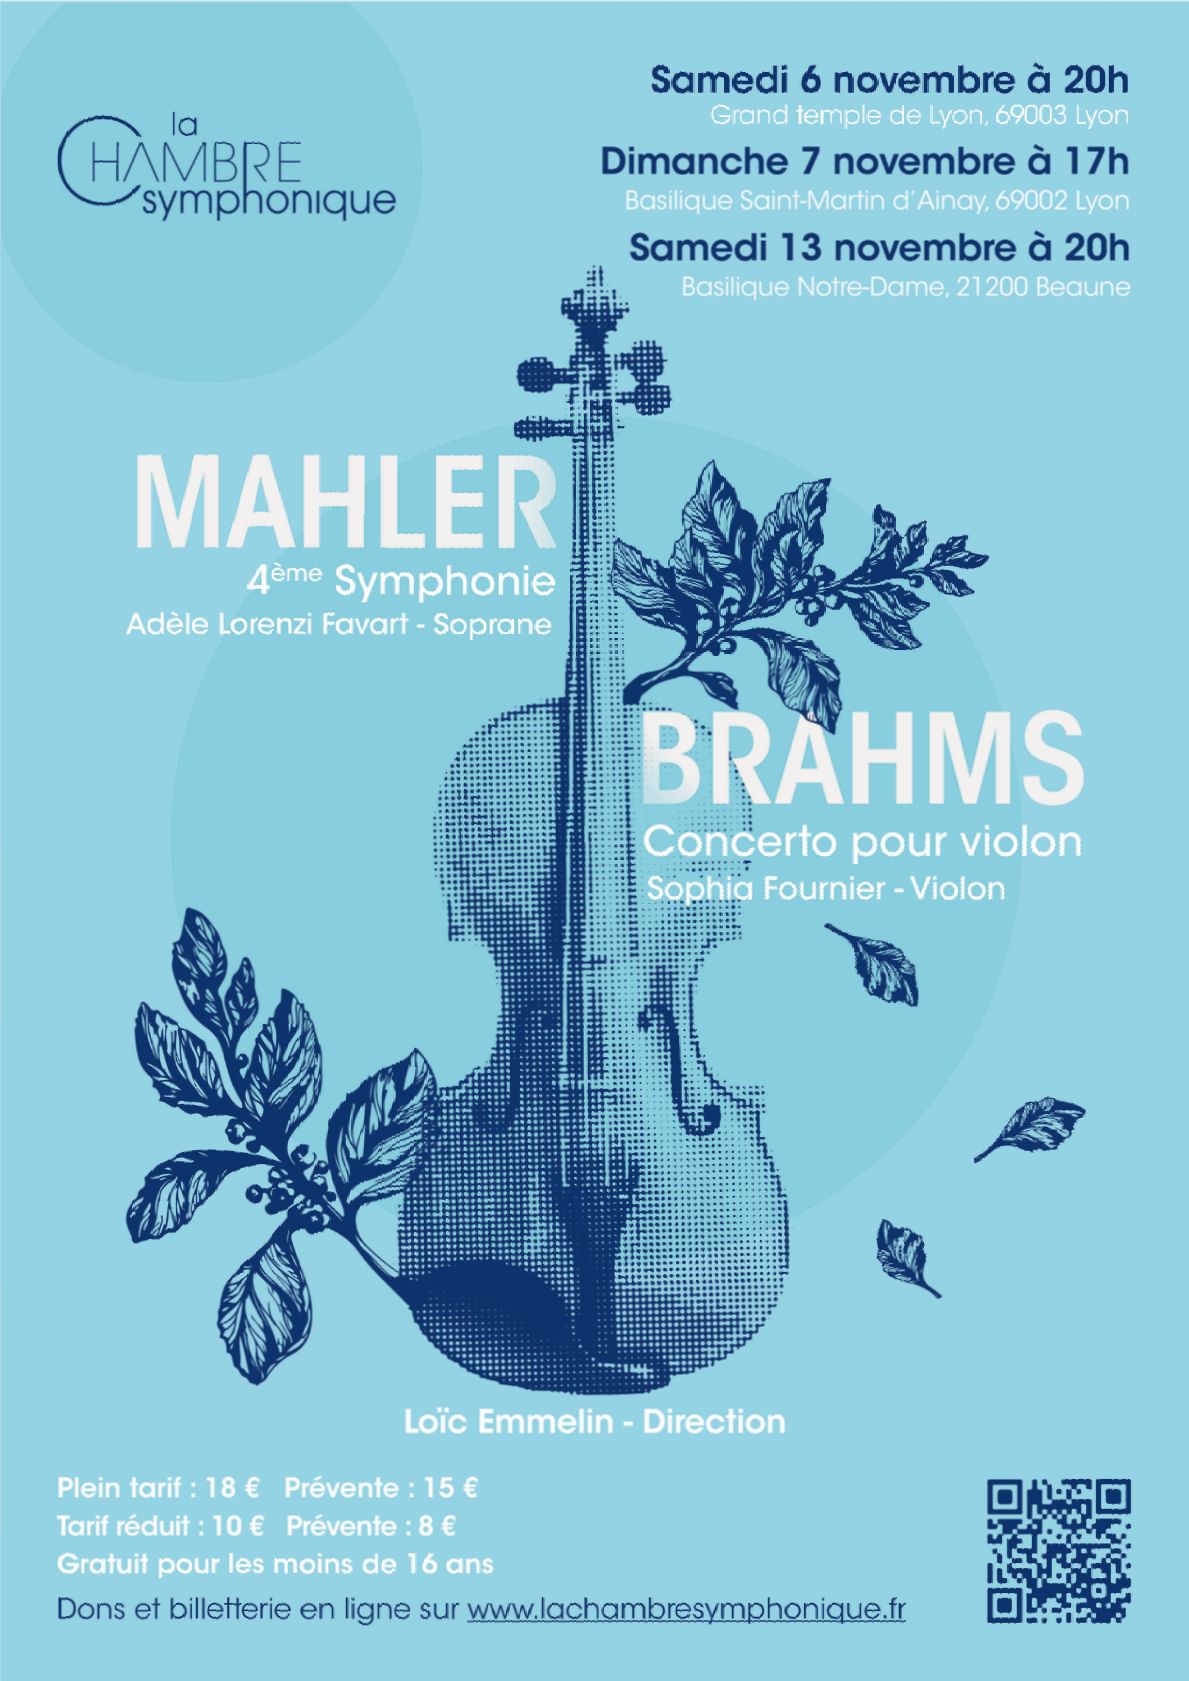 4eme symphonie de Mahler, soliste . Concerto pour violon, soliste Sophia Fournier.